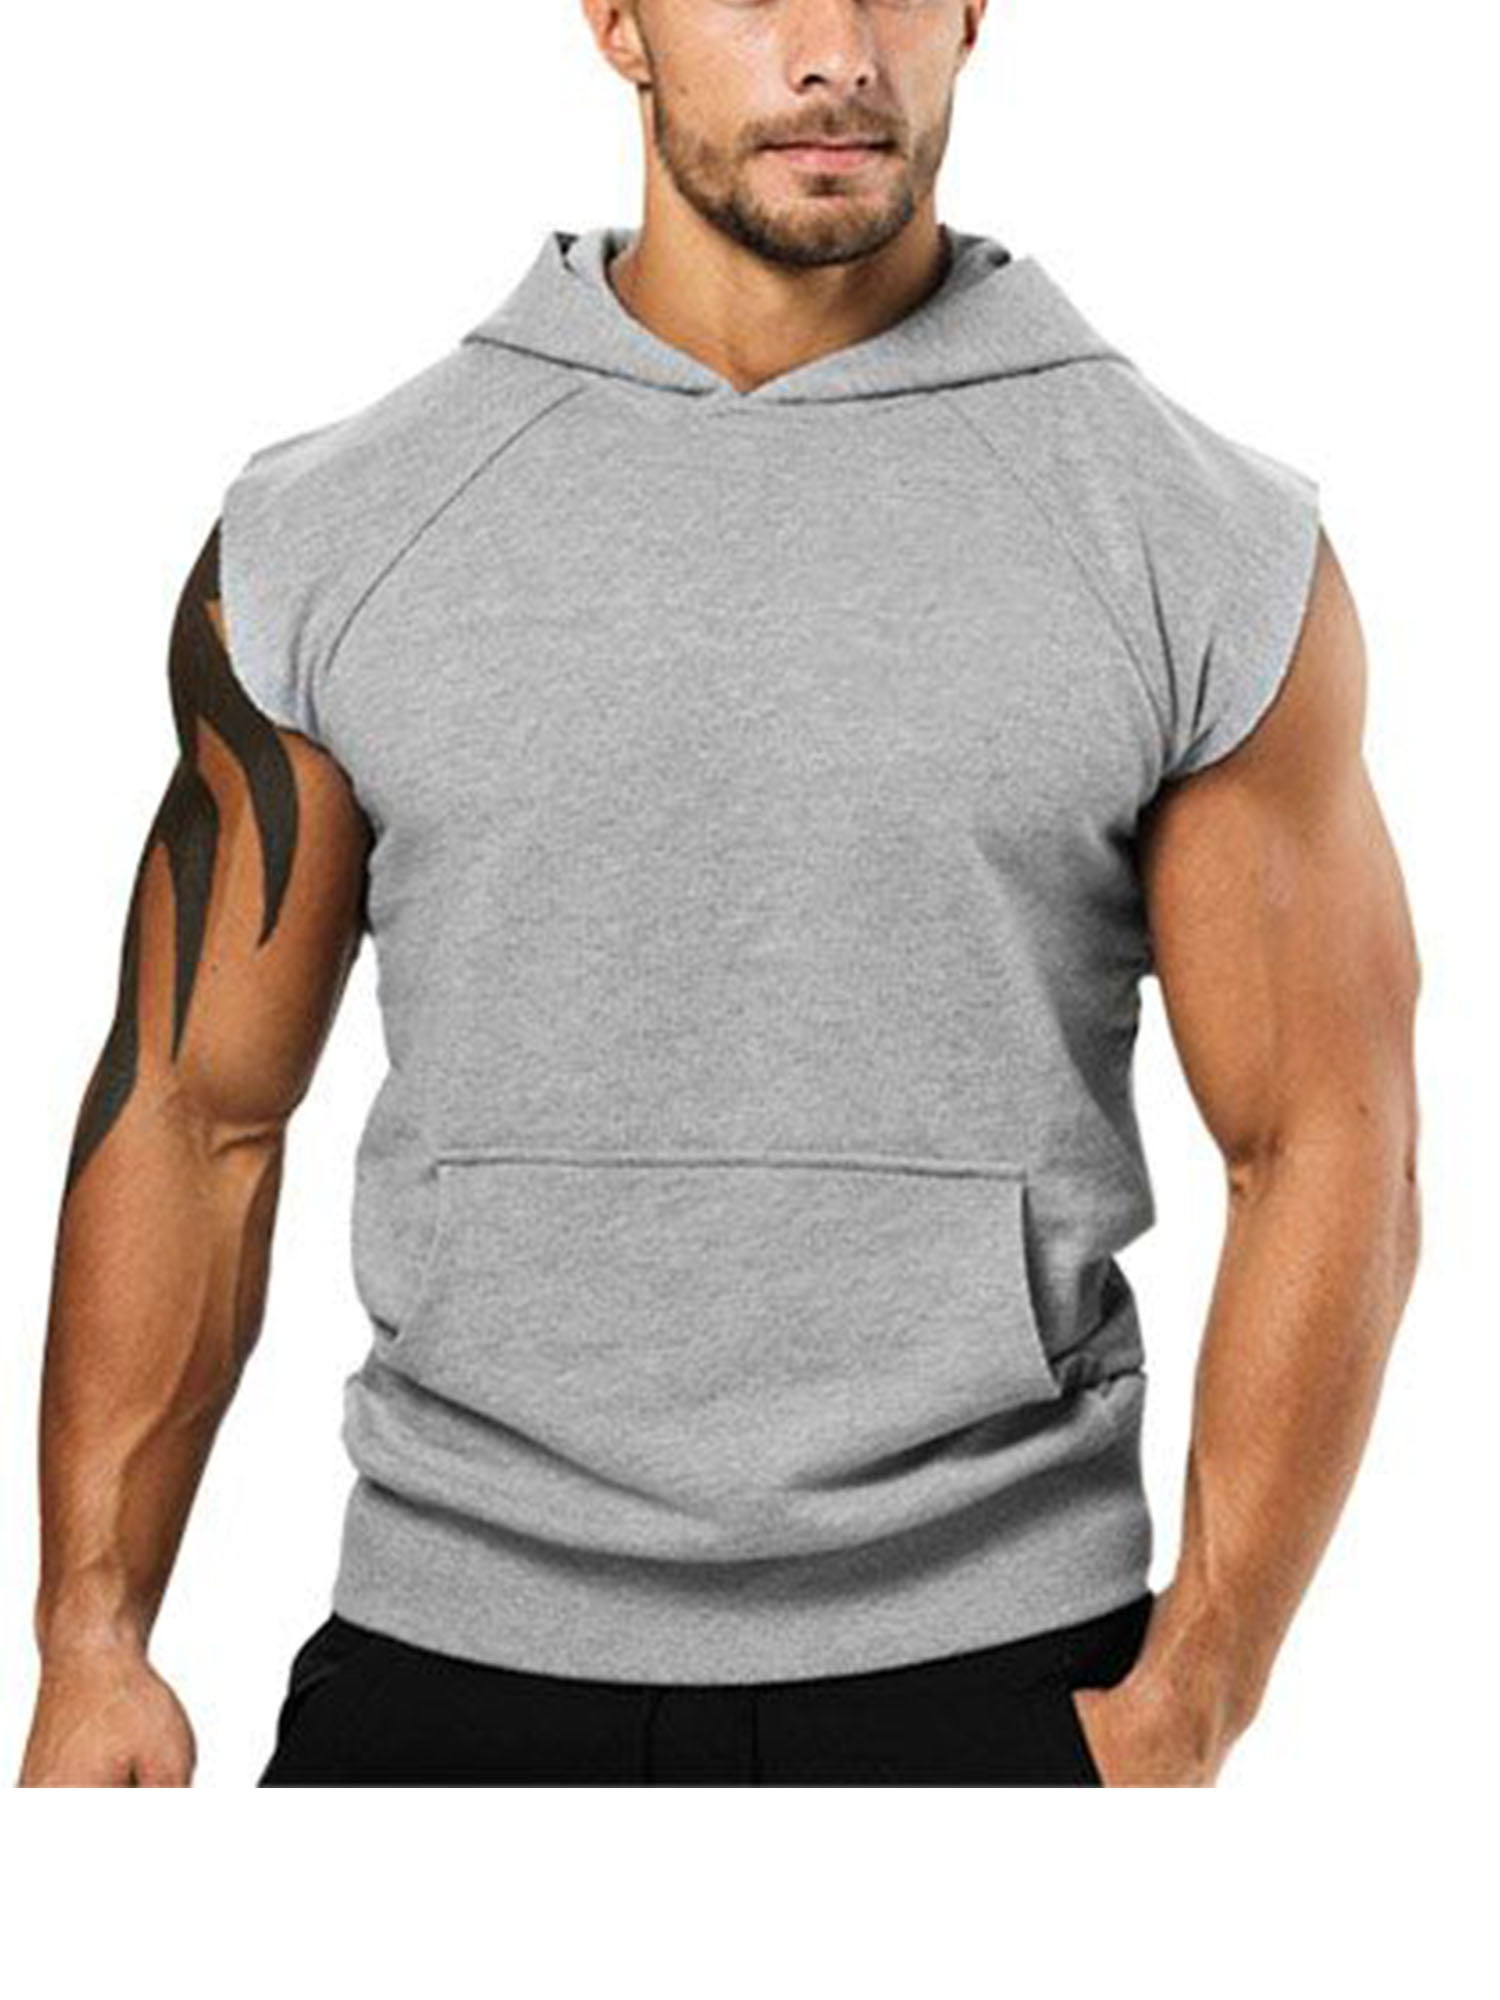 YYG Men Sleeveless Color Block Solid Round Neck Bodybuilding Jersey T-Shirt Tank Top 